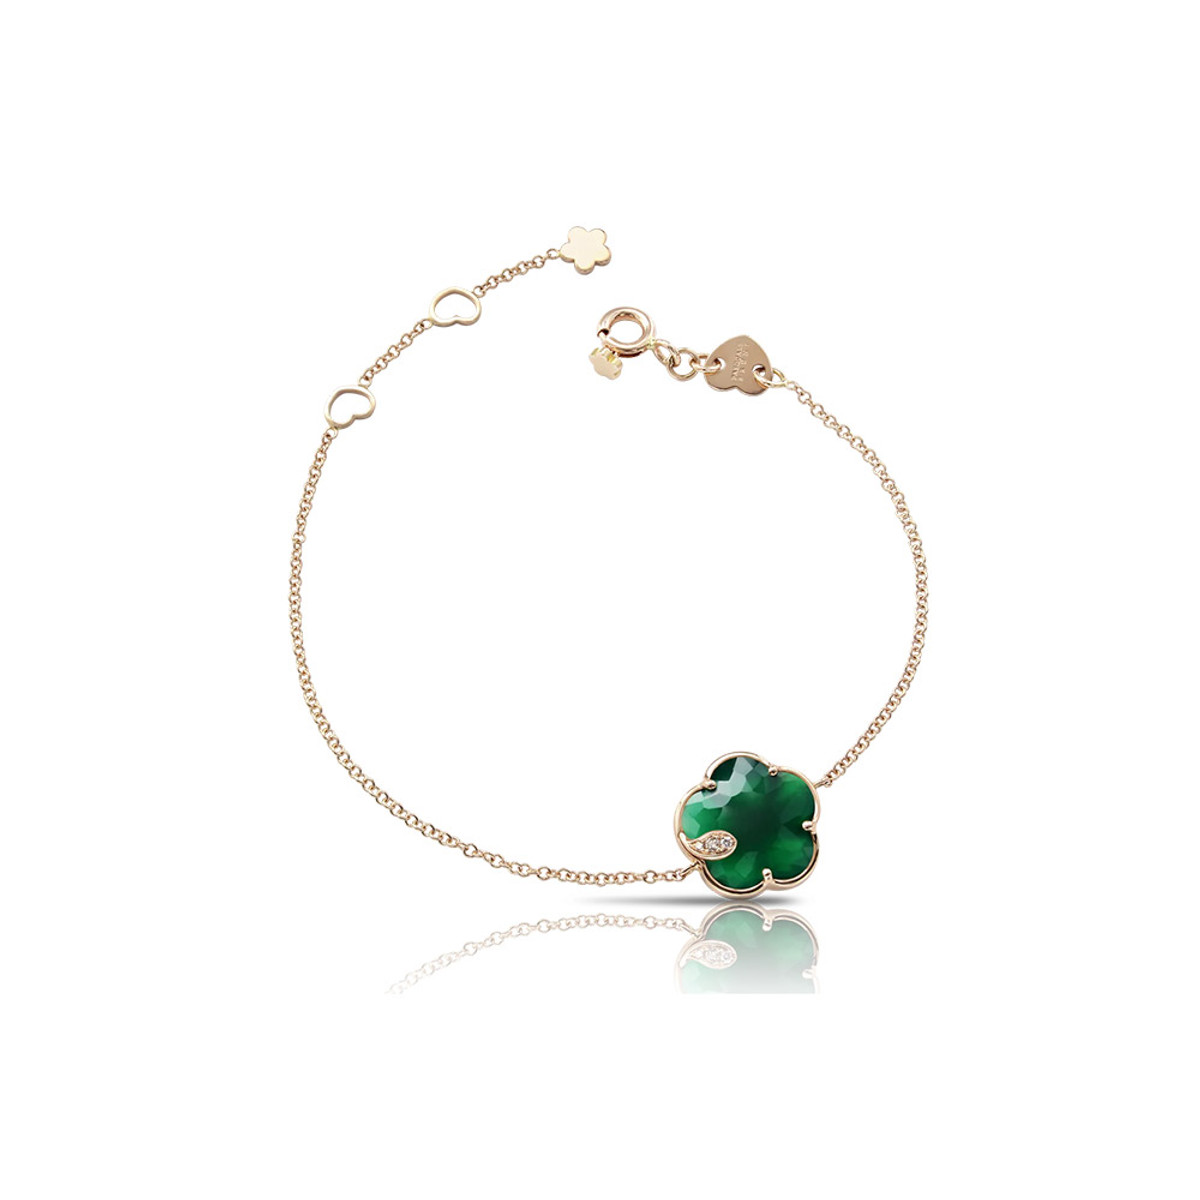 Pasquale Bruni 18K Rose Gold Green Agate Bracelet-57237 Product Image